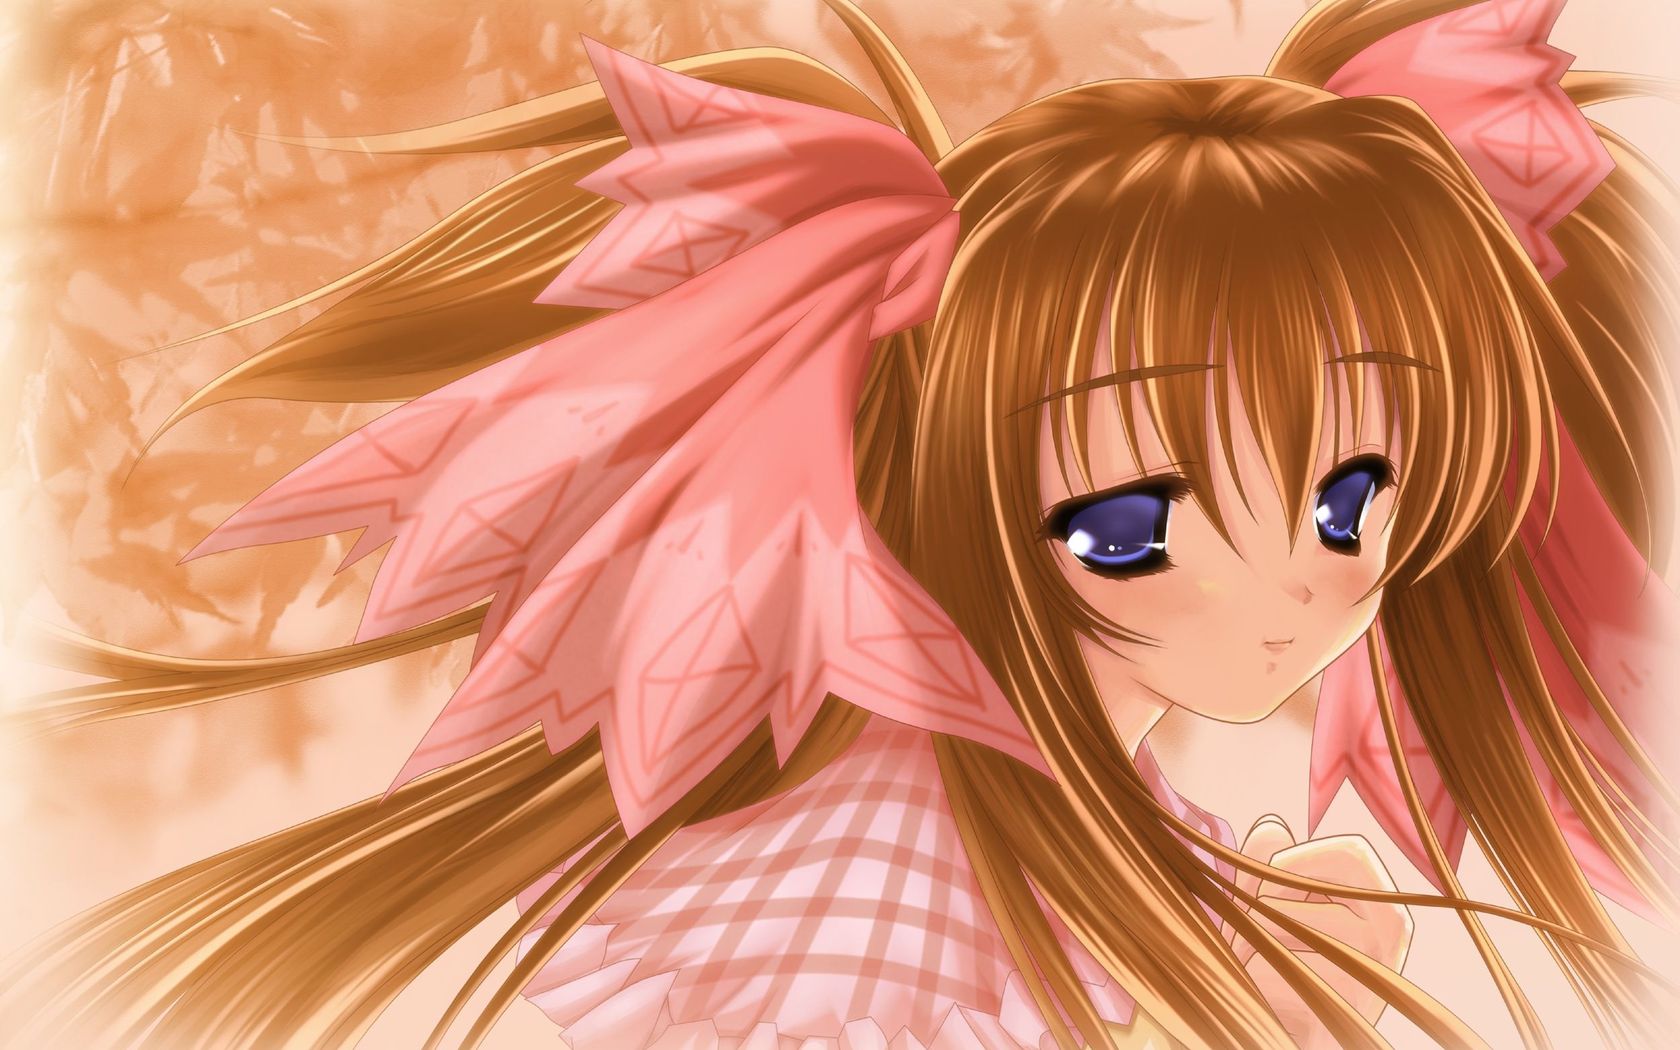 Beautiful Anime Doll Girl Pink Dress Stock Photo 1033335991  Shutterstock